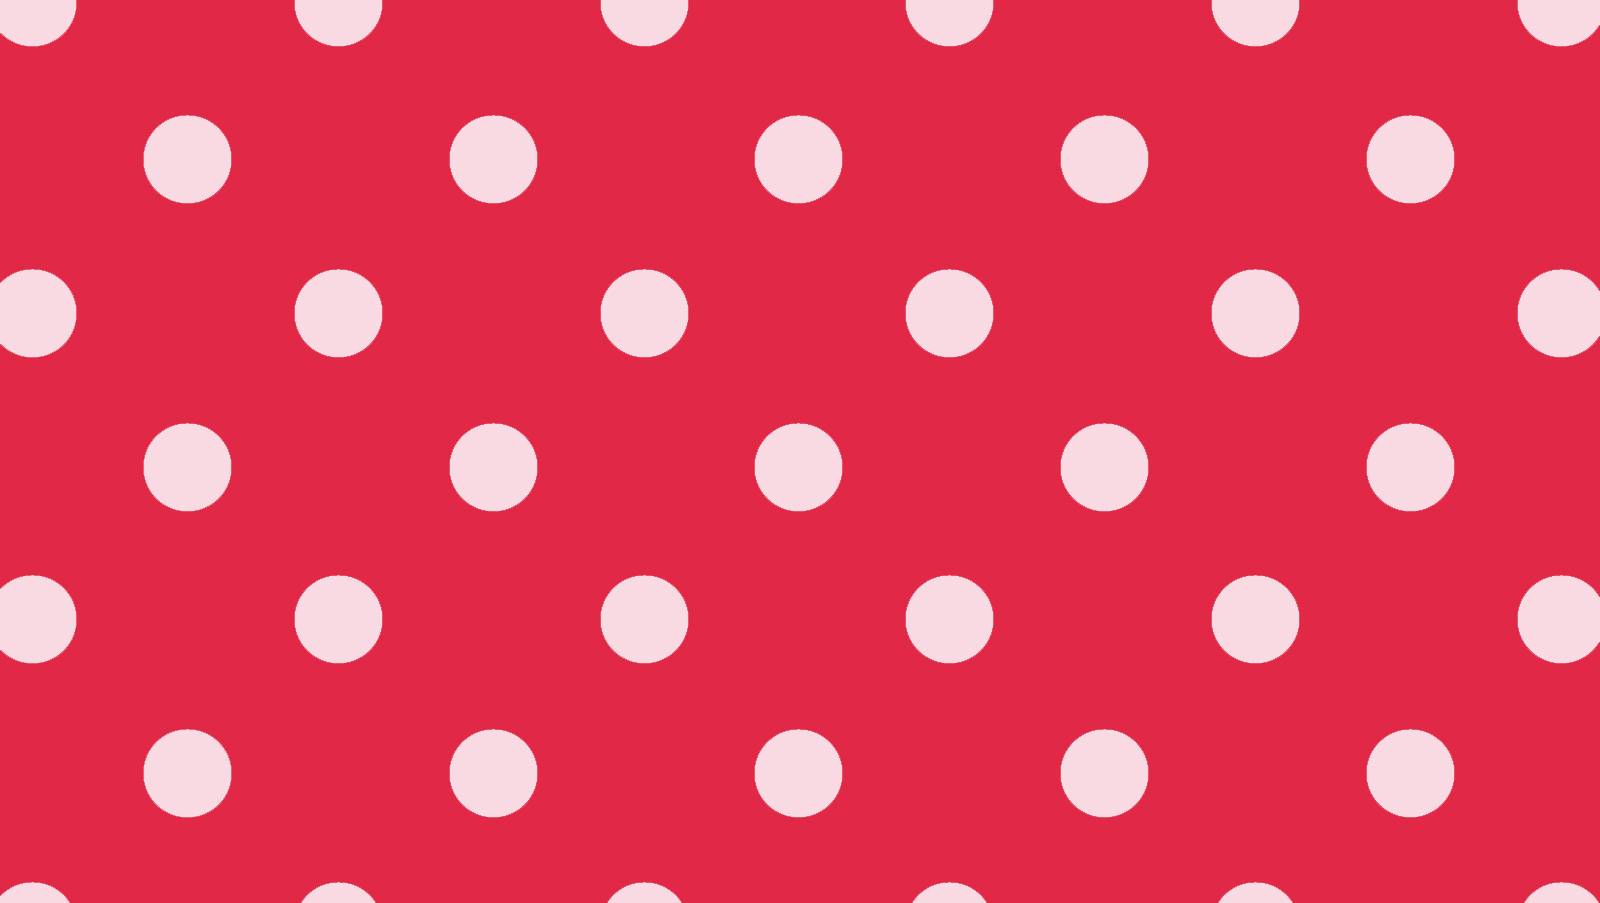 polka dot wallpaper,pattern,polka dot,red,pink,design